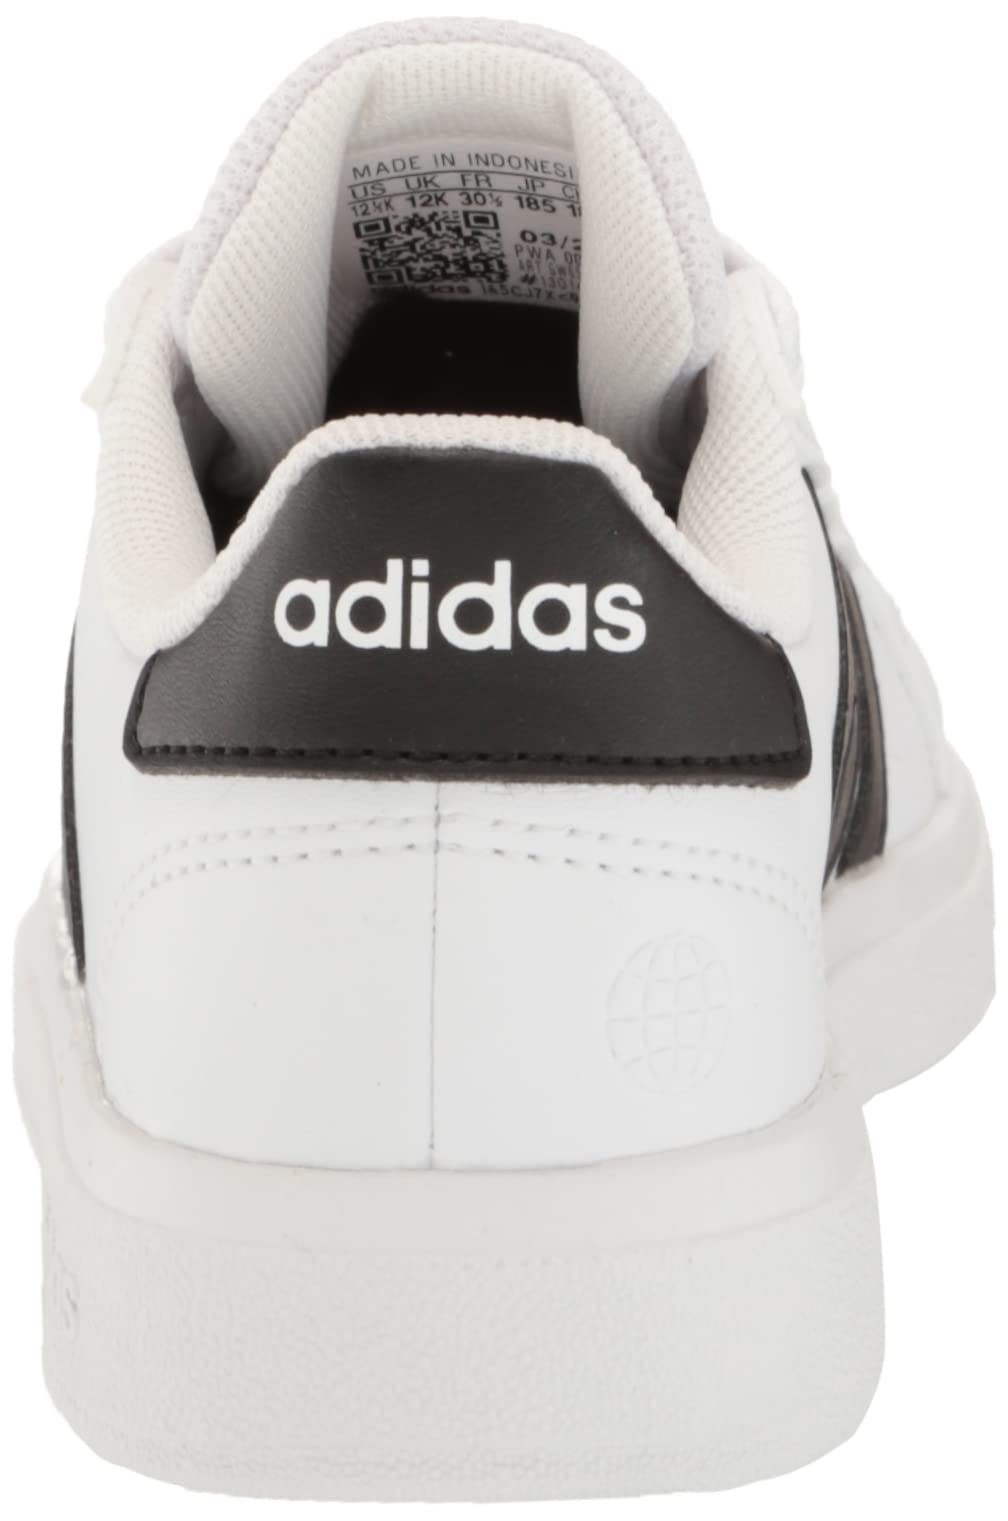 adidas Grand Court 2.0 (Little Kid/Big Kid) White/Core Black/Core Black 5 Big Kid M